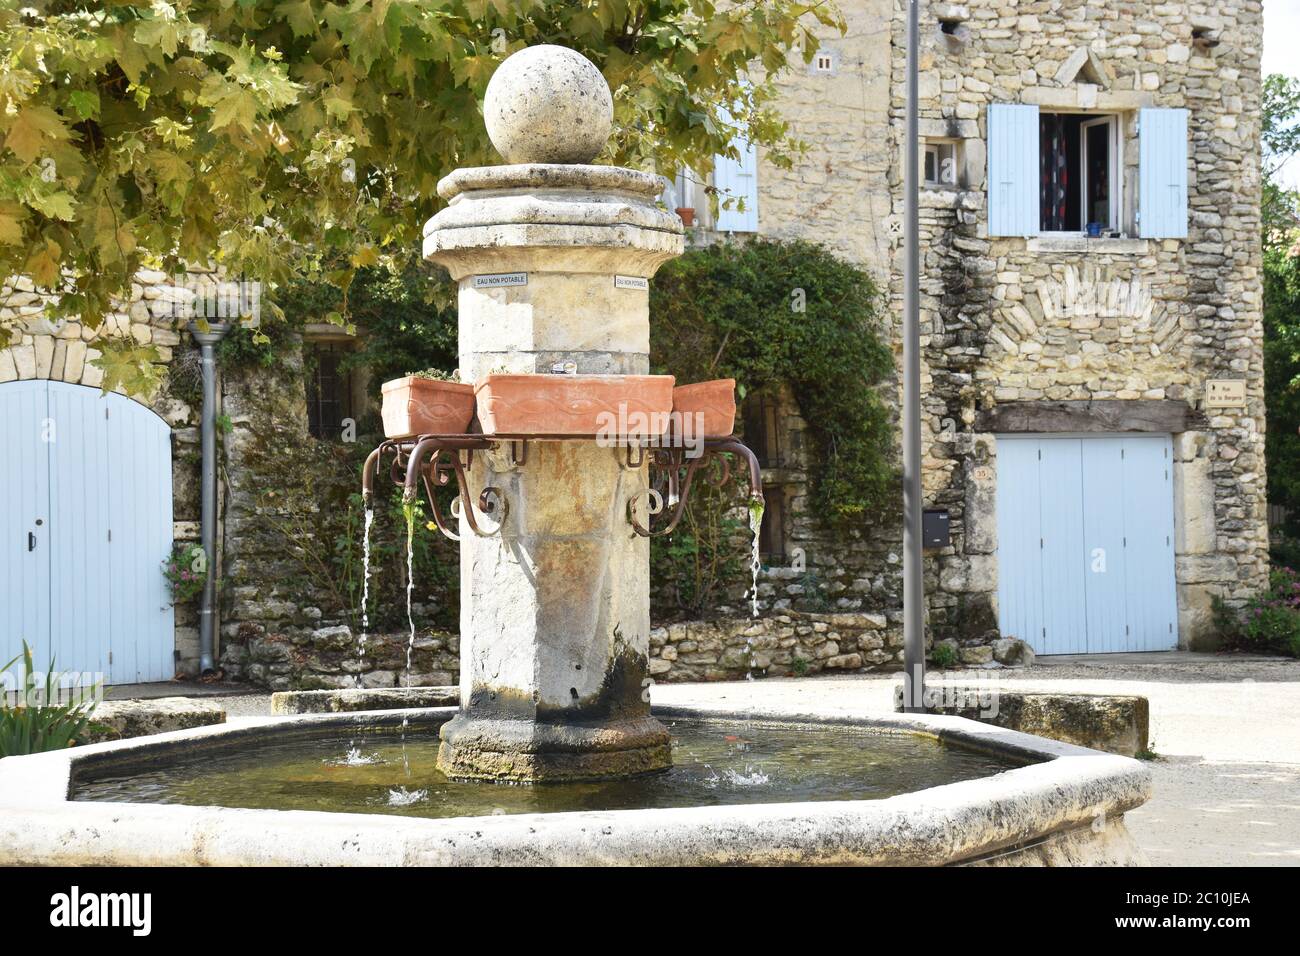 Fountain in village, Chantemerle les Grignan, Drôme Provençale, France Stock Photo